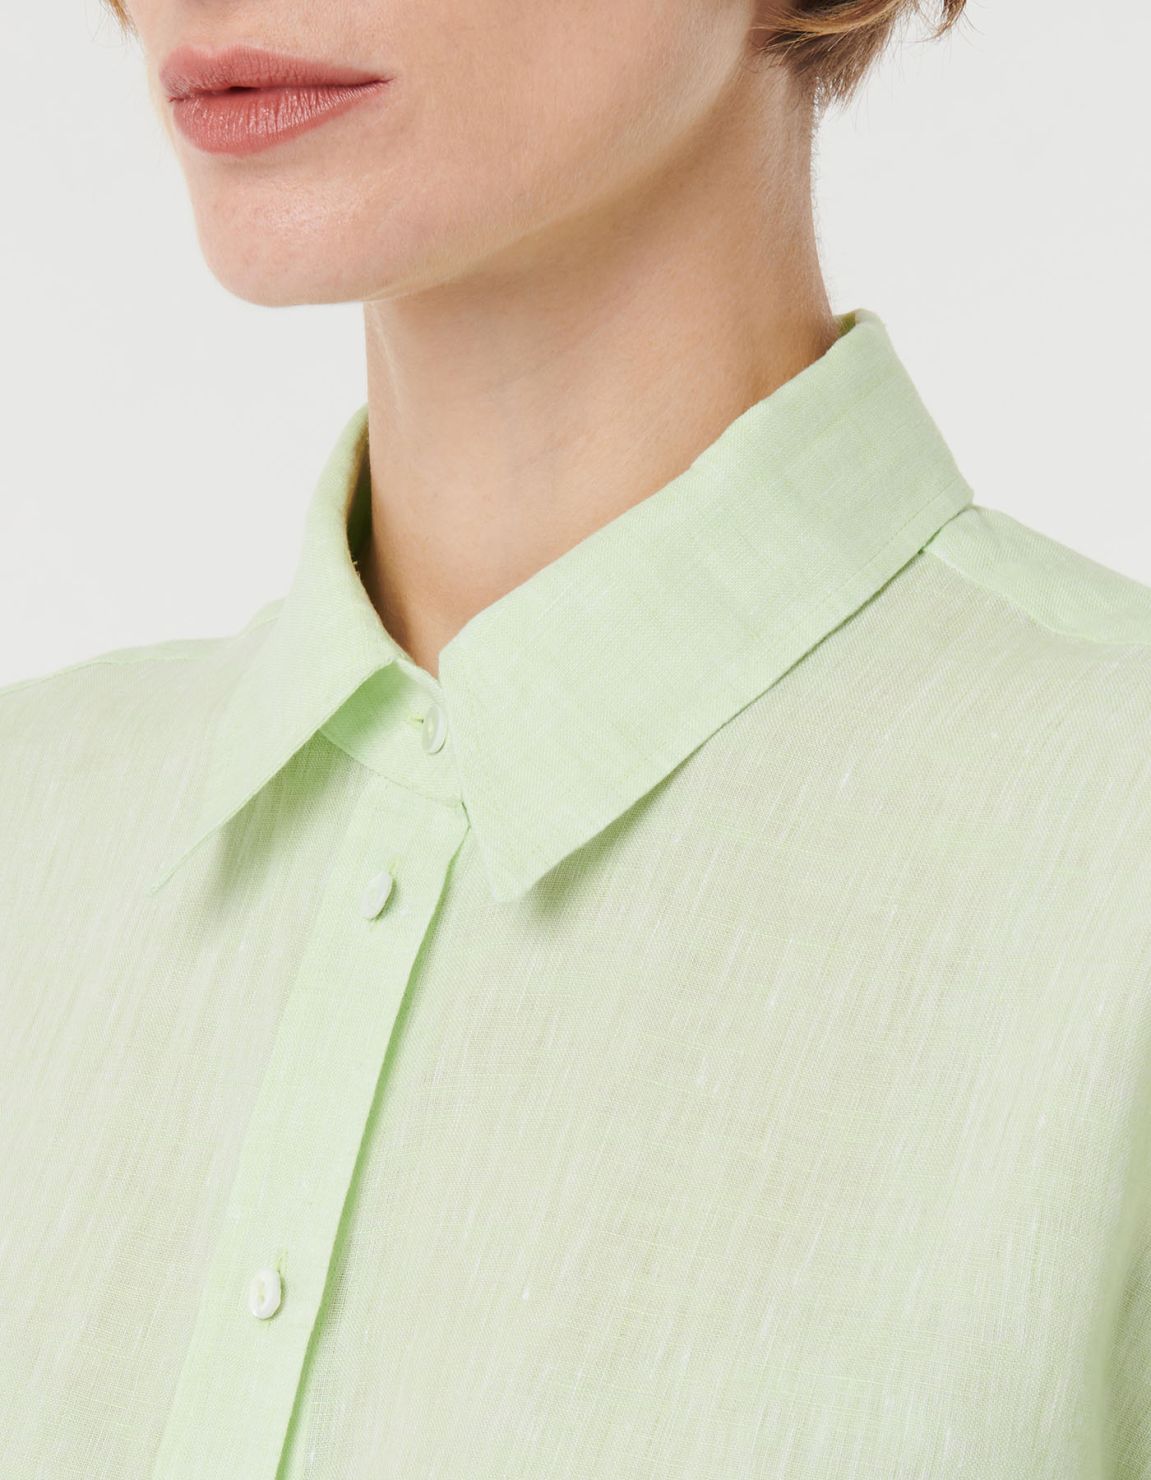 Shirt Green Apple Linen Solid colour Over 2